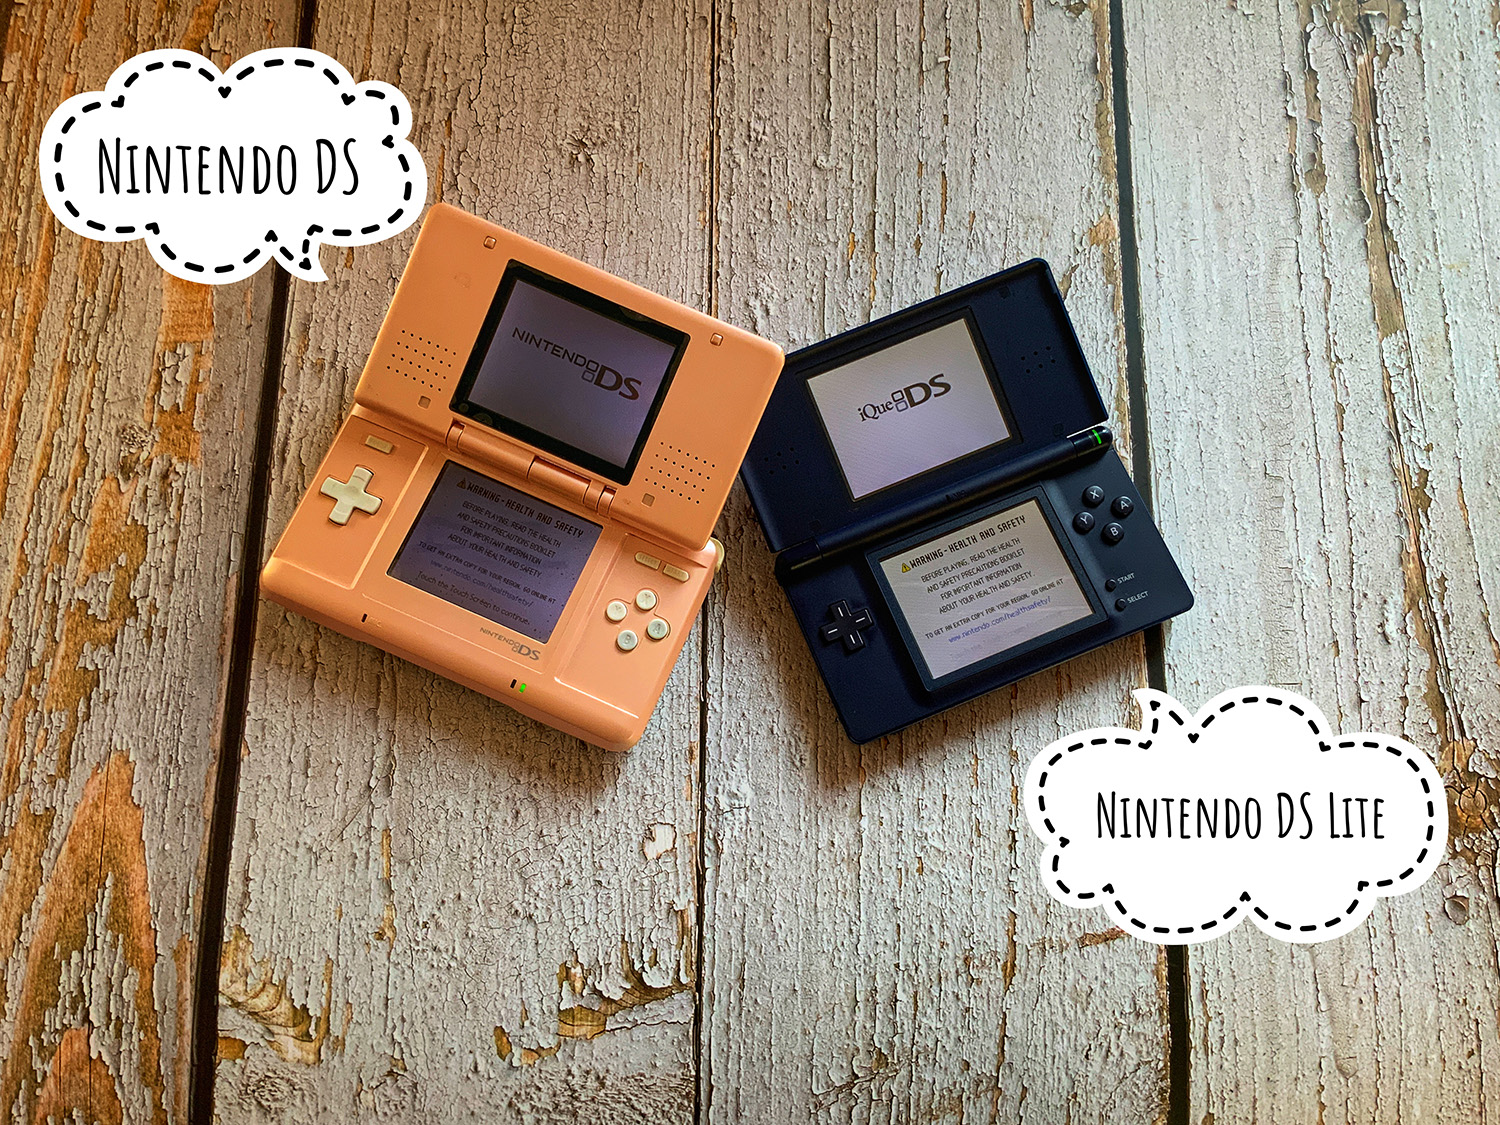 Nintendo DS / Nitnendo DS Lite